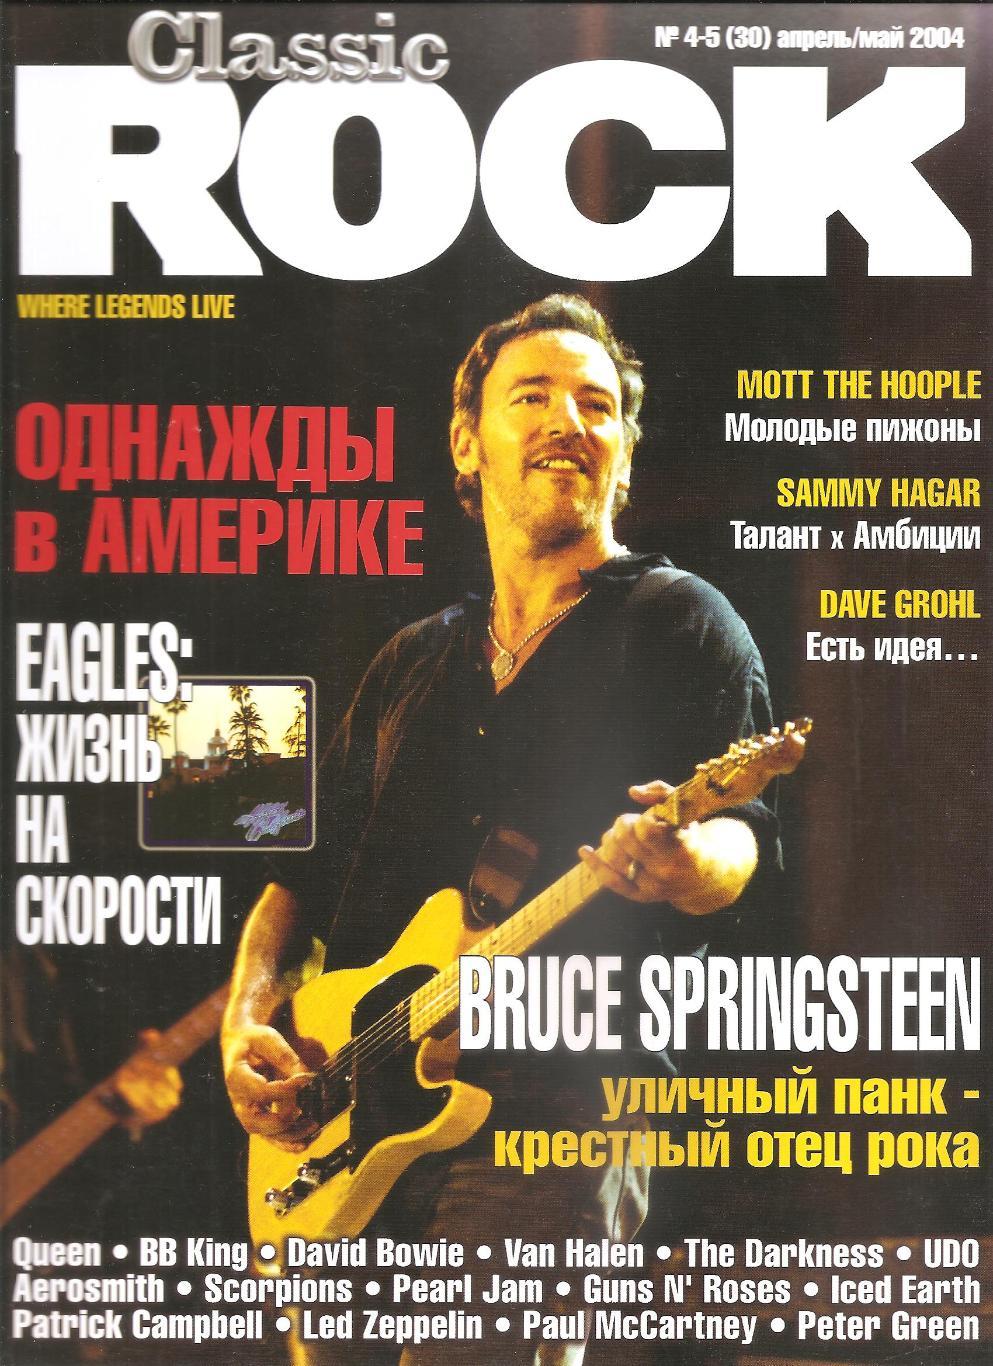 Журнал CLASSIC ROCK # 4-5 (30) апрель/май 2004